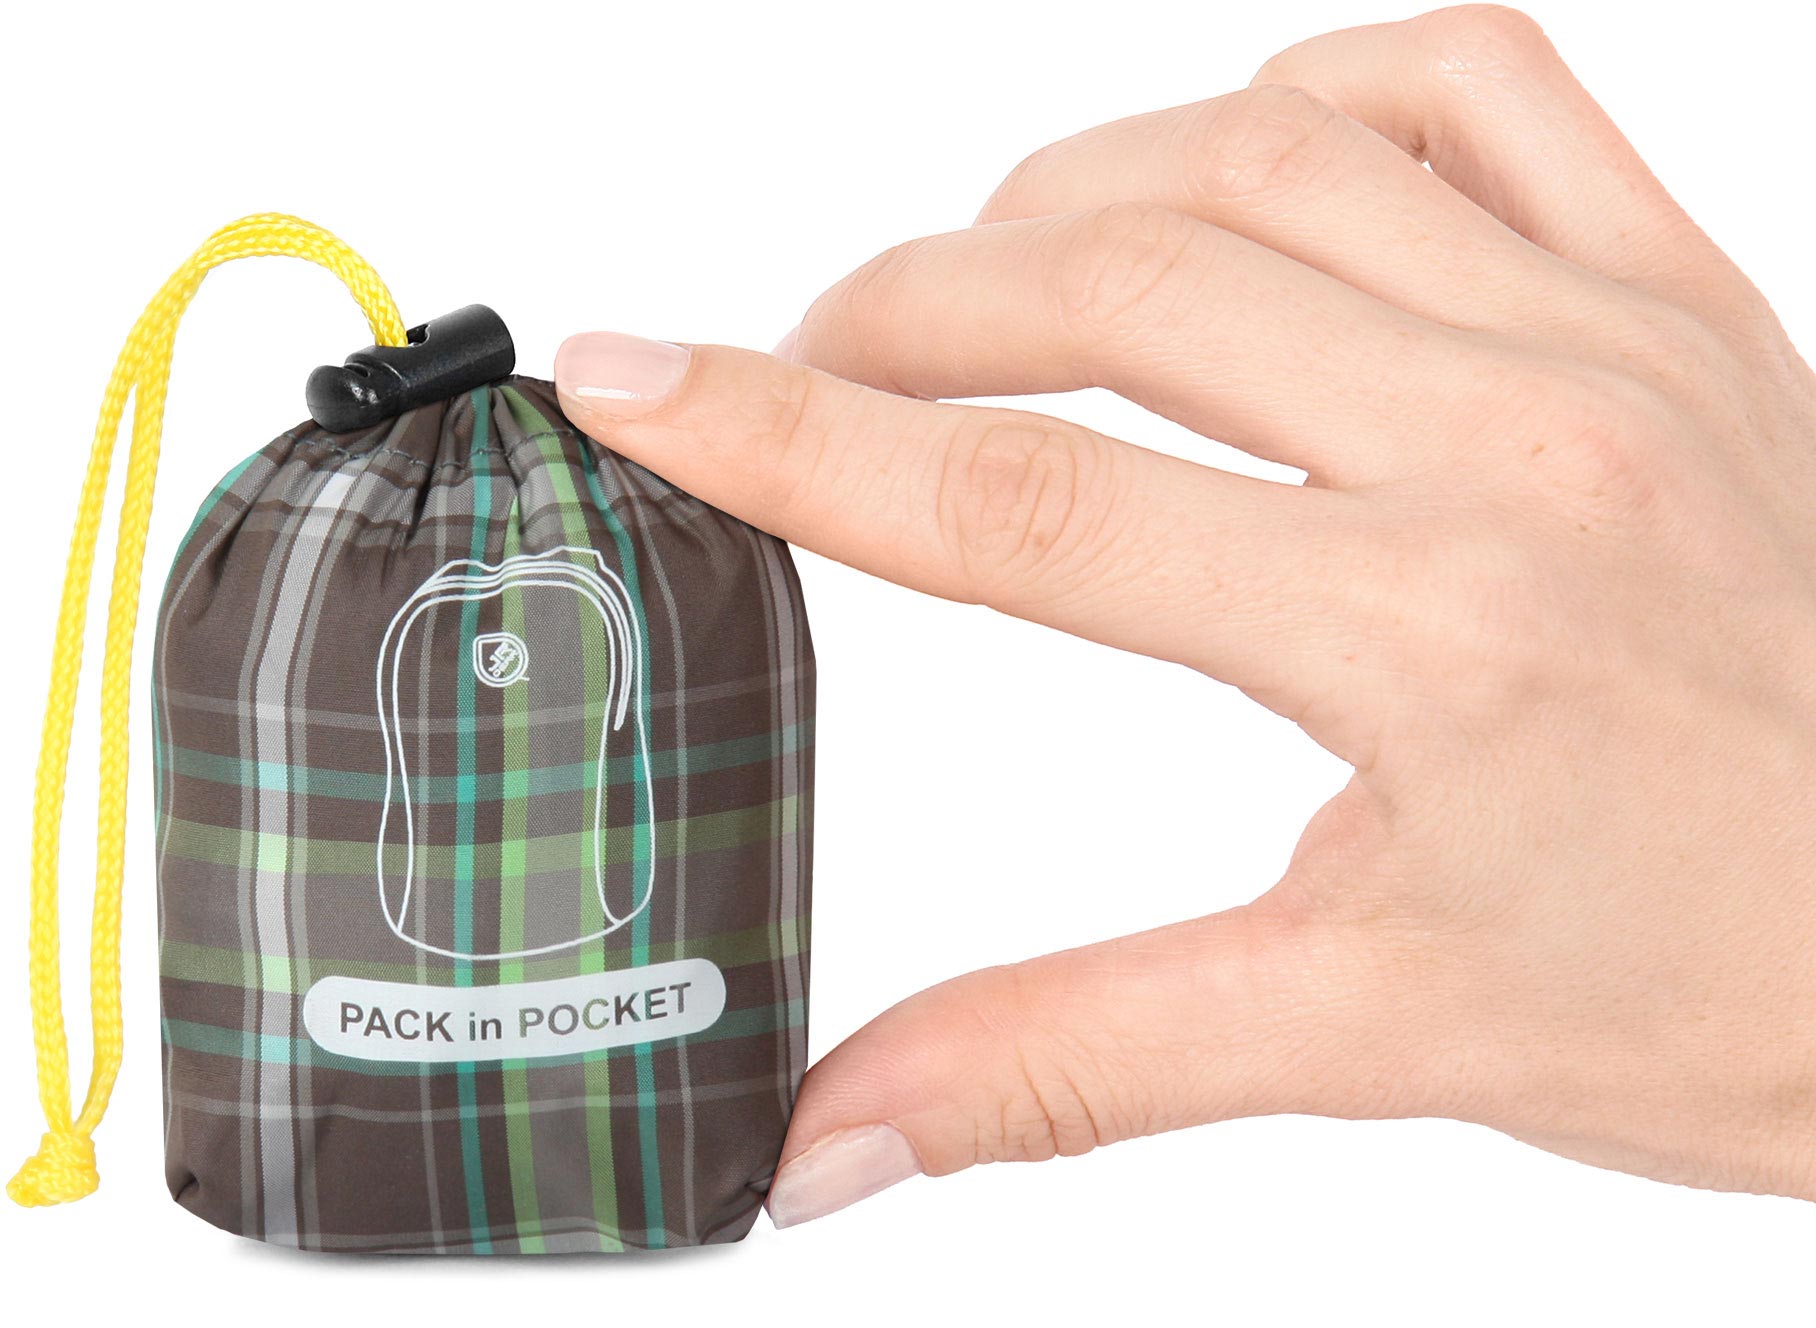 Pocket Rucksack